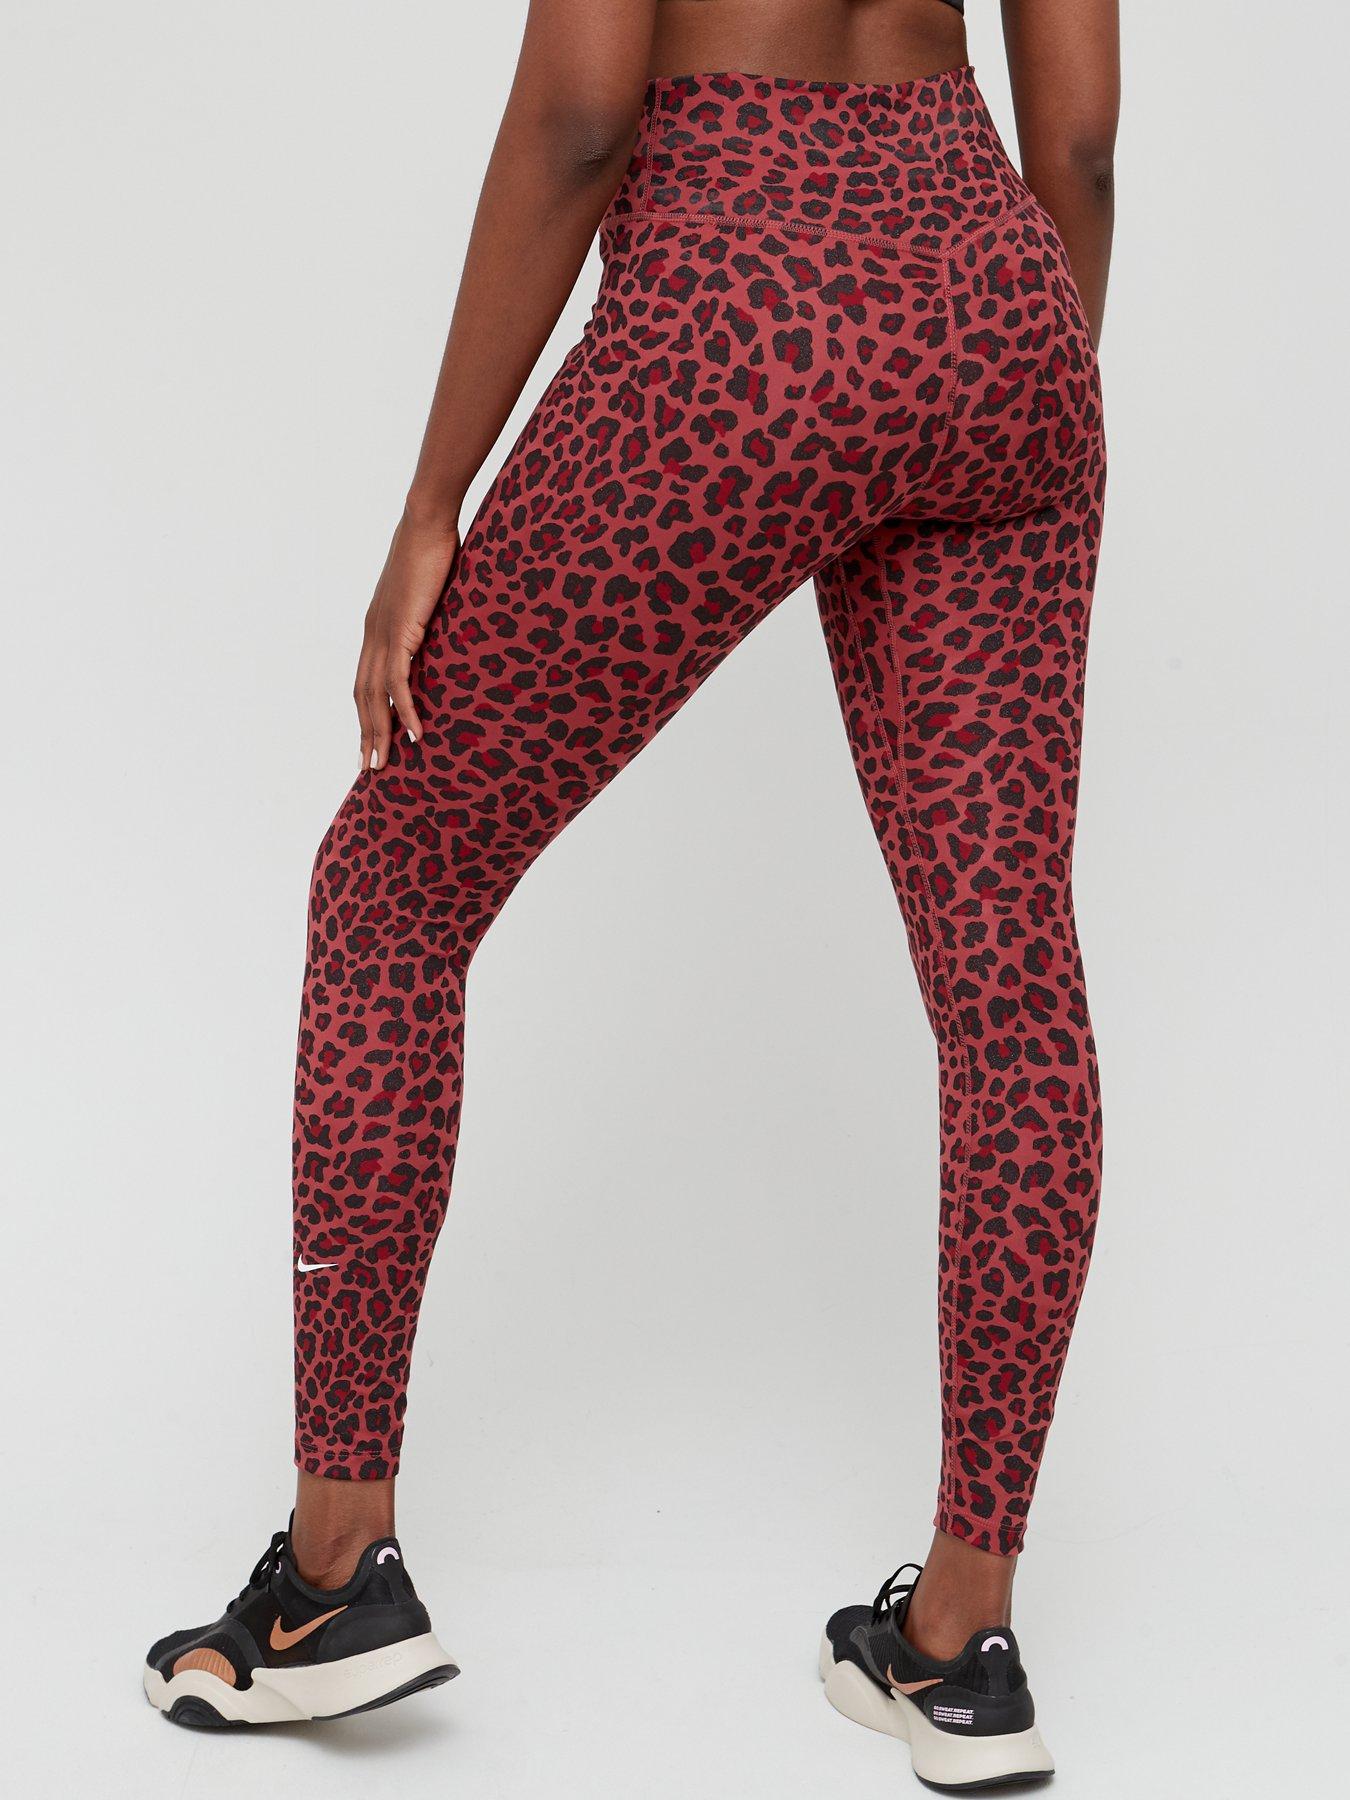 Nike The One Dri-FIT Leopard Print Leggings - Pink | very.co.uk